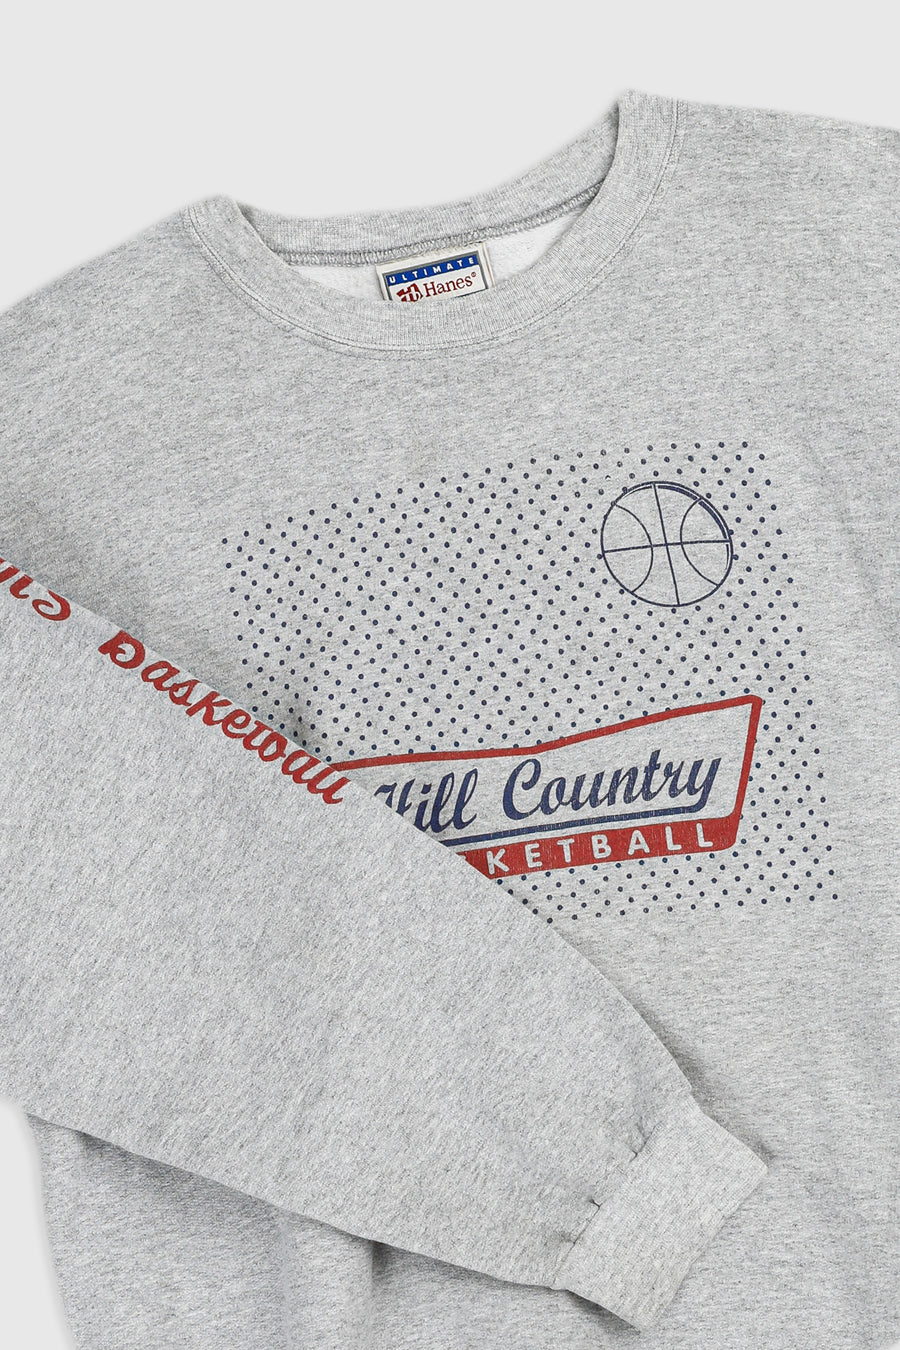 Vintage Hill County Basketball Sweatshirt - M